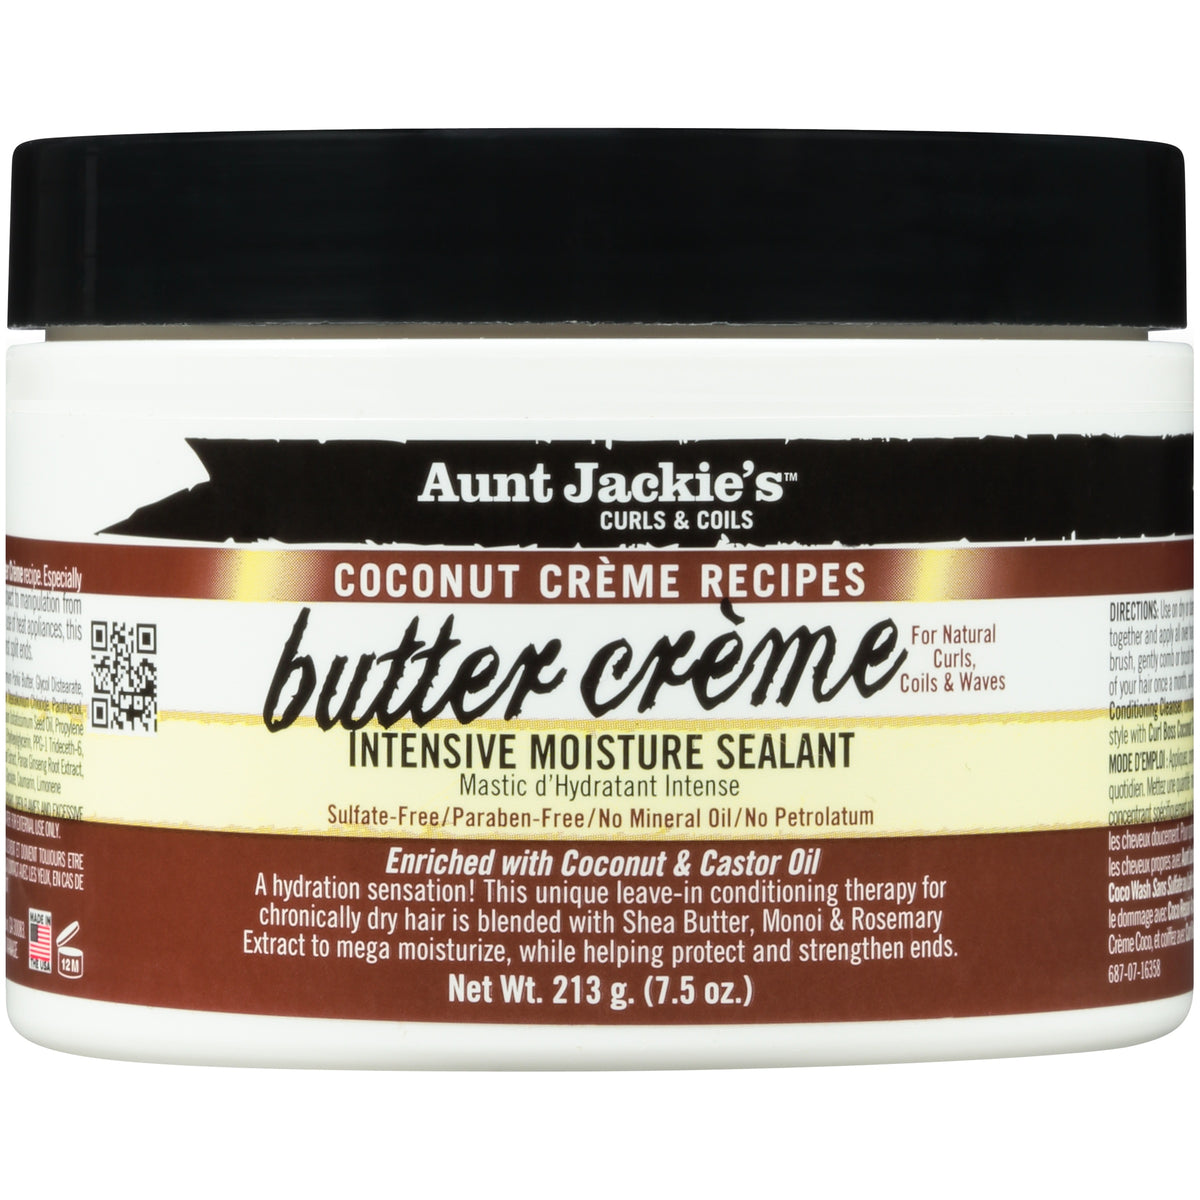 Aunt Jackie's Curls & Coils Coconut Creme Recipes Butter Creme Intensive Moisture Sealant Leave-In Conditioner 7.5 Oz. Jar